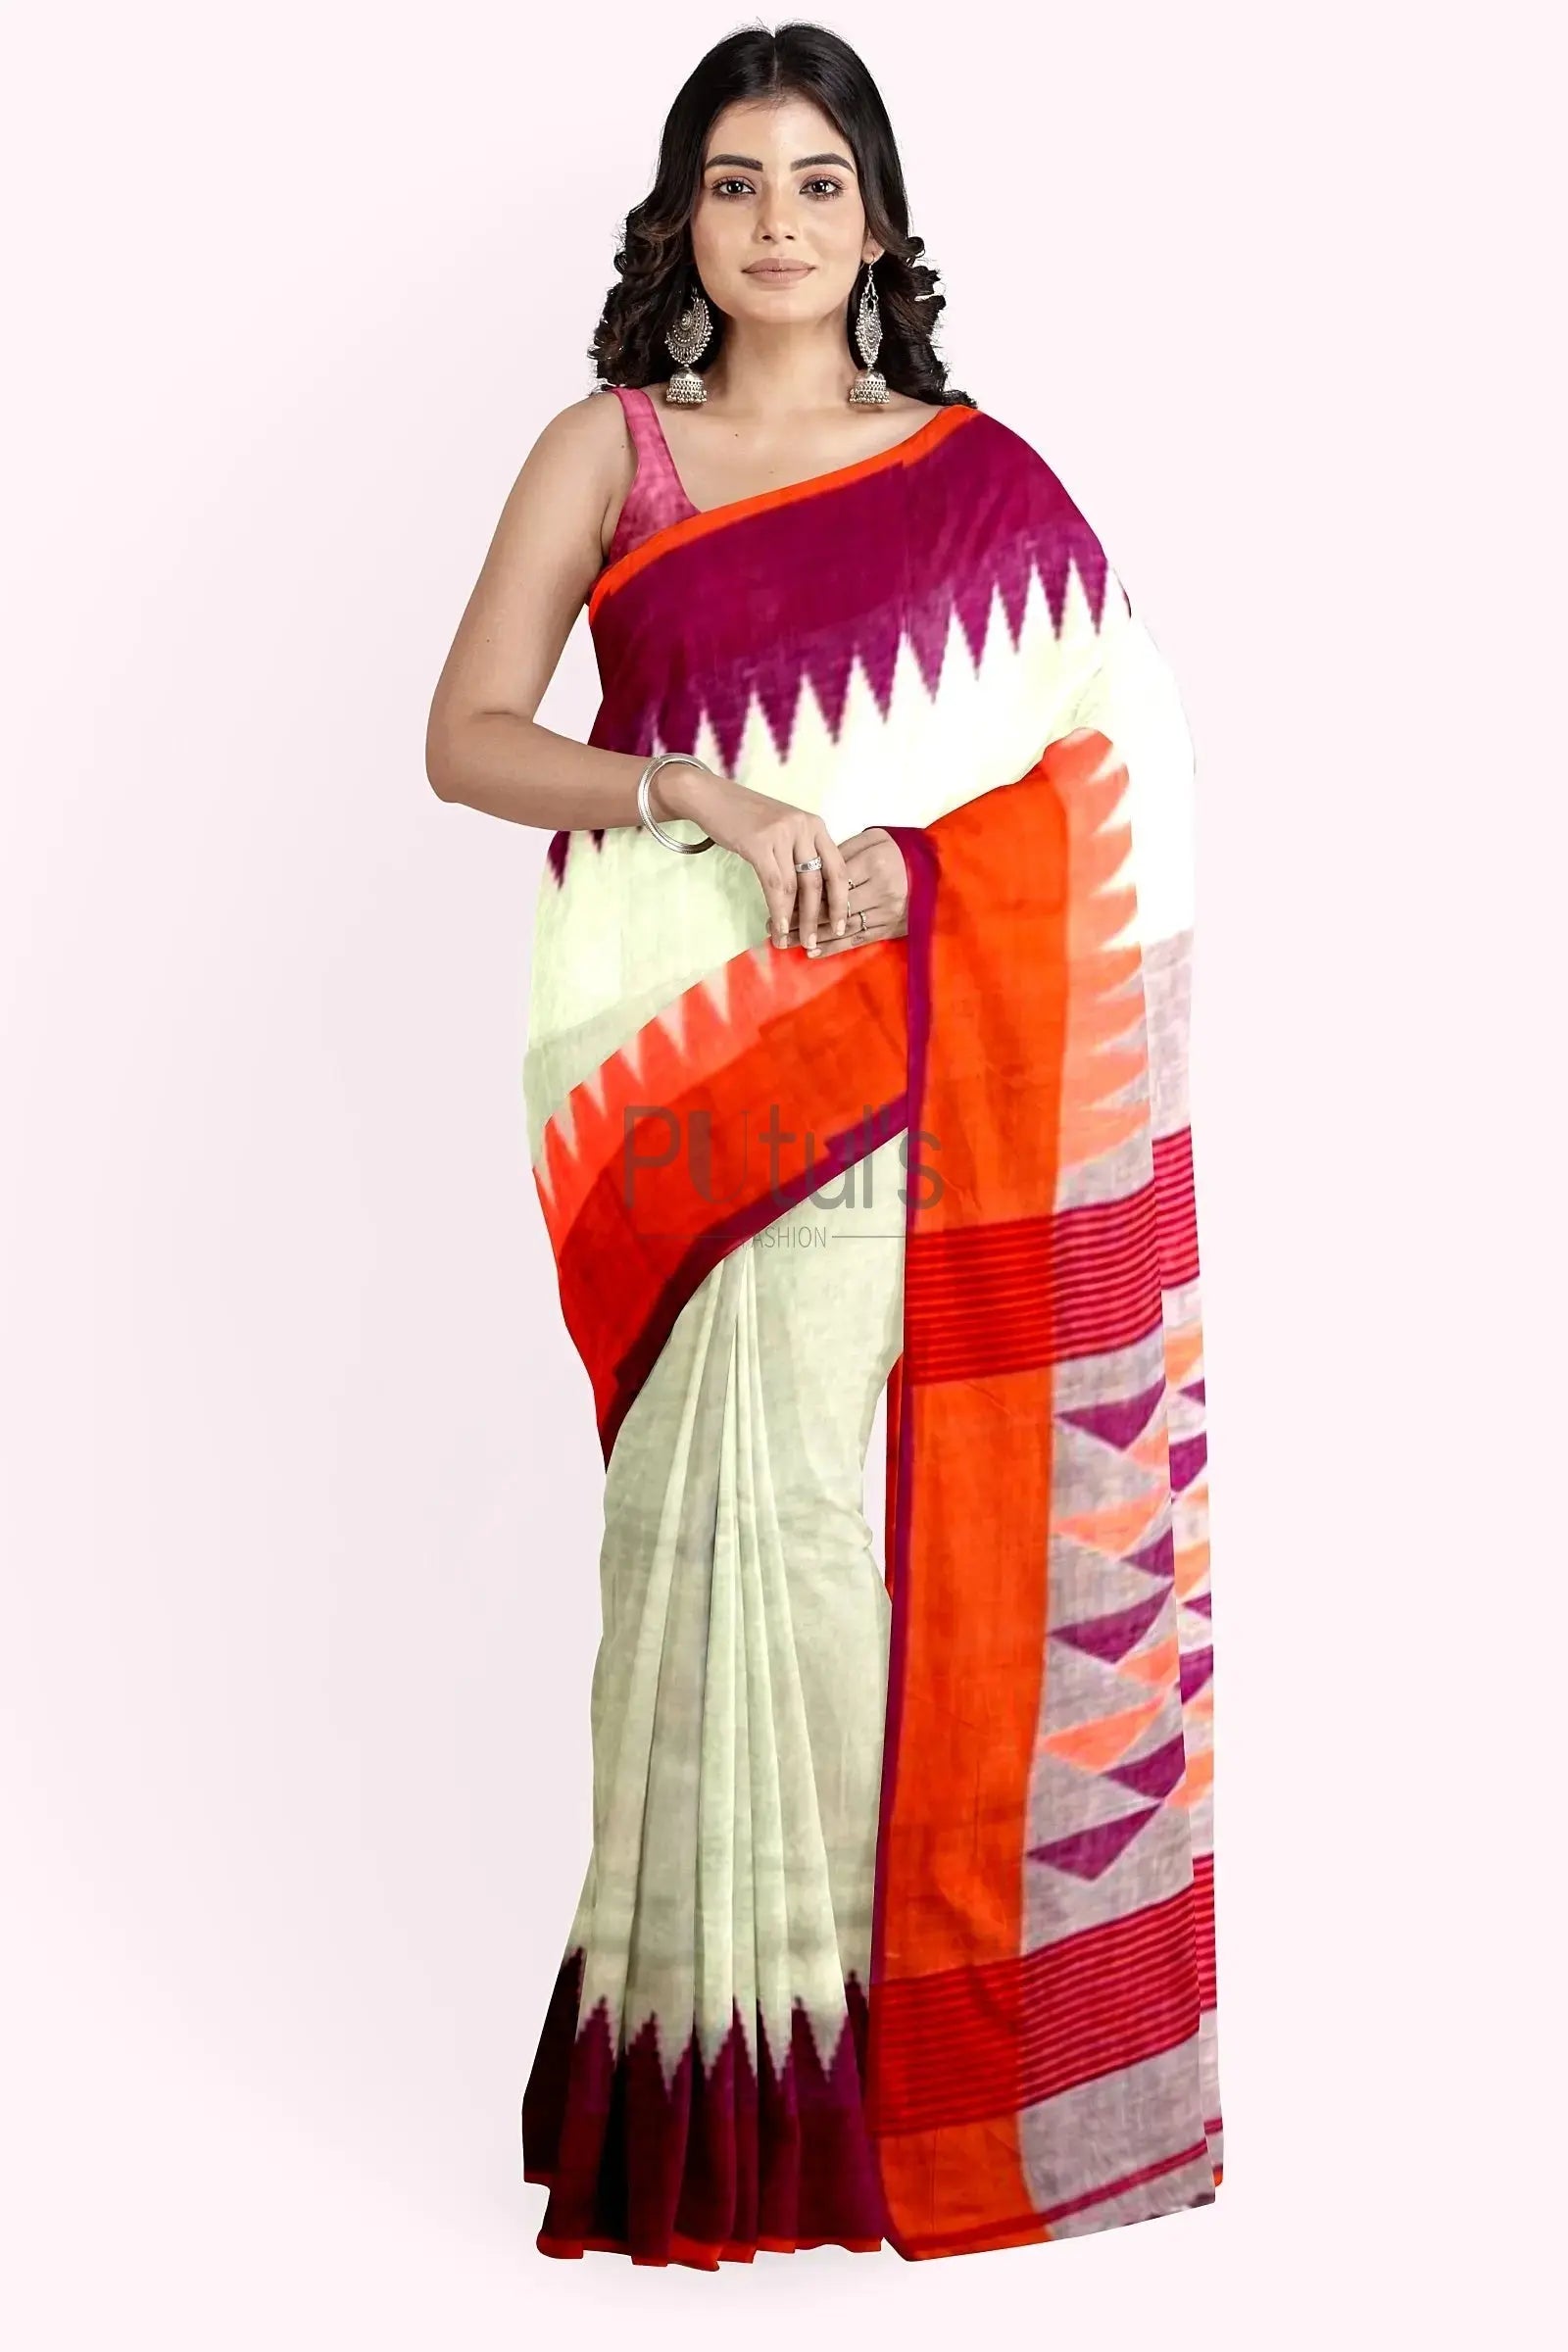 Ganga yamuna white organic linen saree - Putul's Fashion